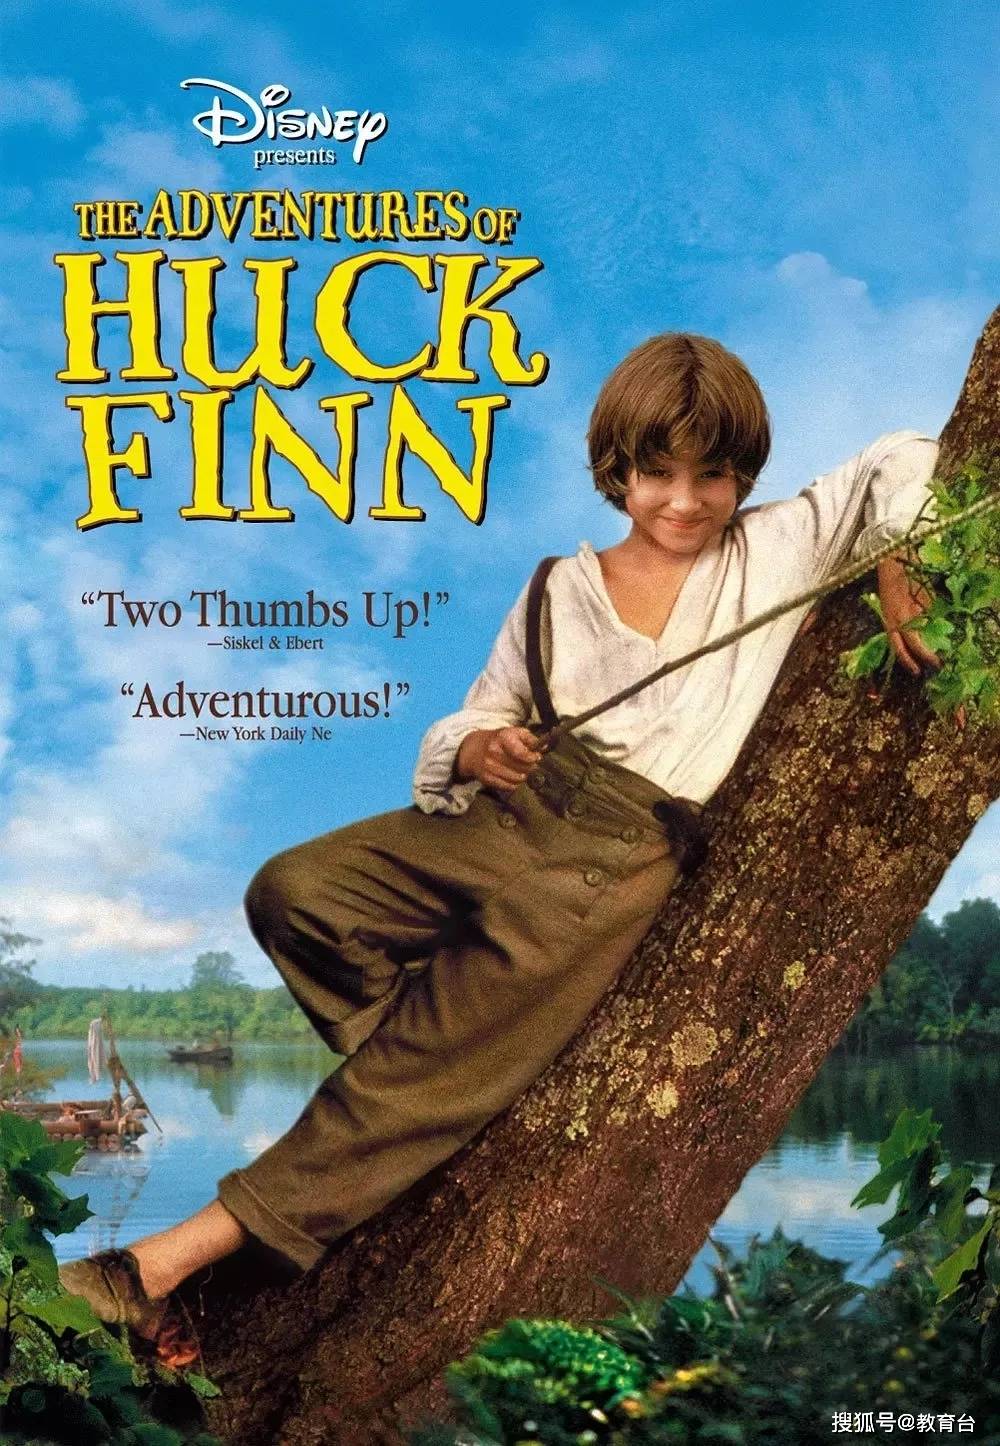 the adventures of huck finn6,《哈克·贝利·芬历险记》安是个充满